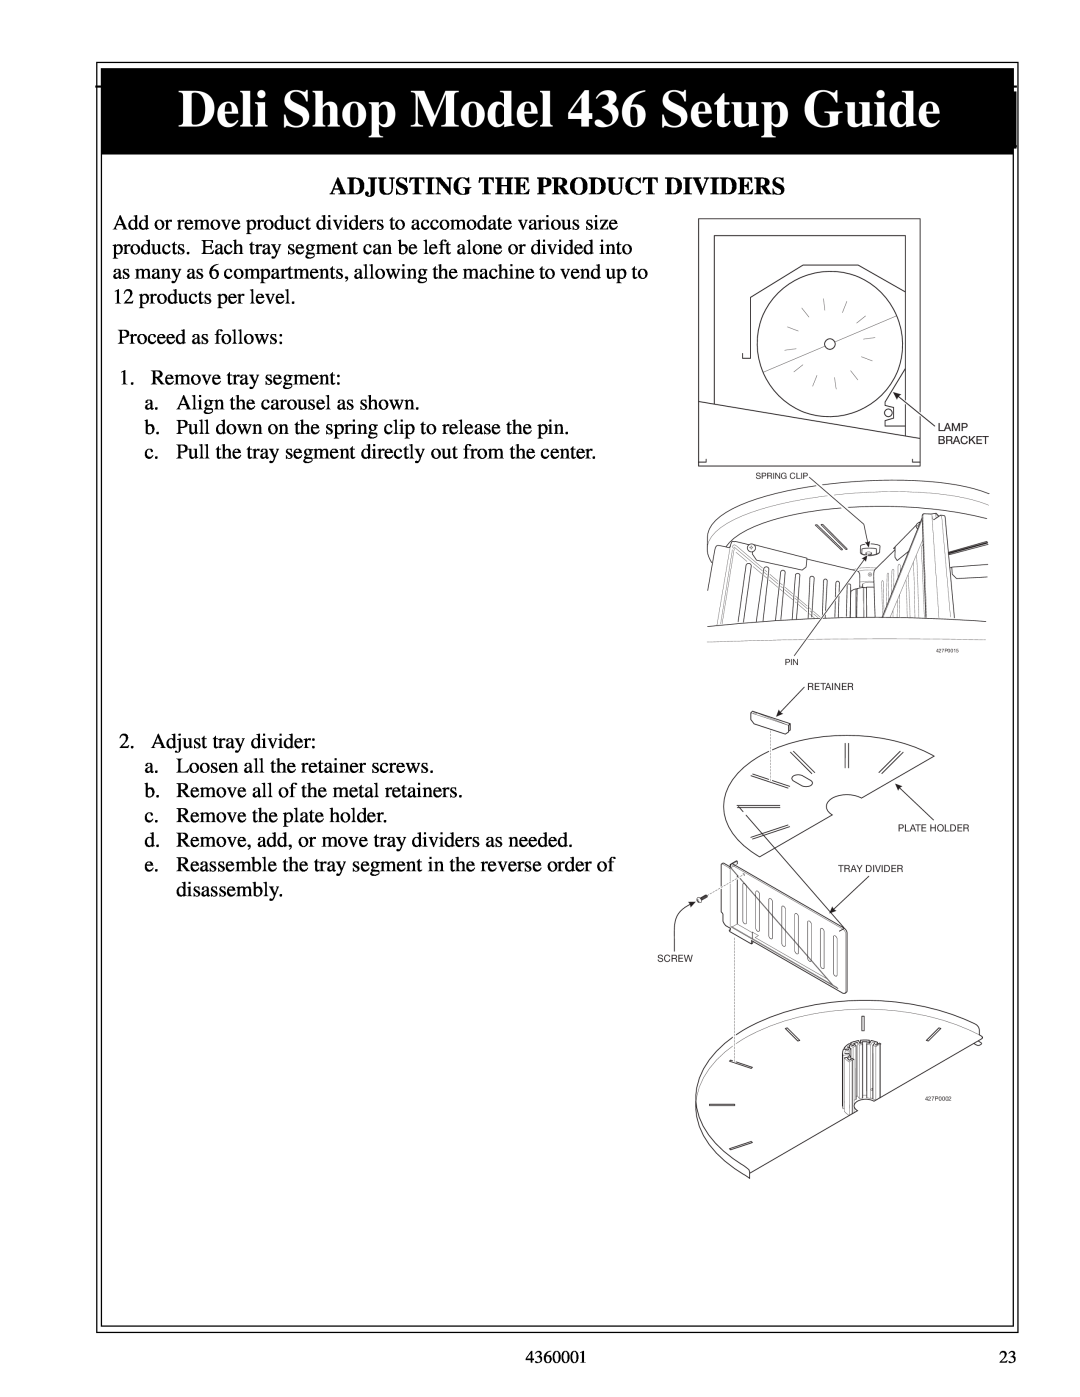 Crane Merchandising Systems manual Adjusting The Product Dividers, Deli Shop Model 436 Setup Guide 